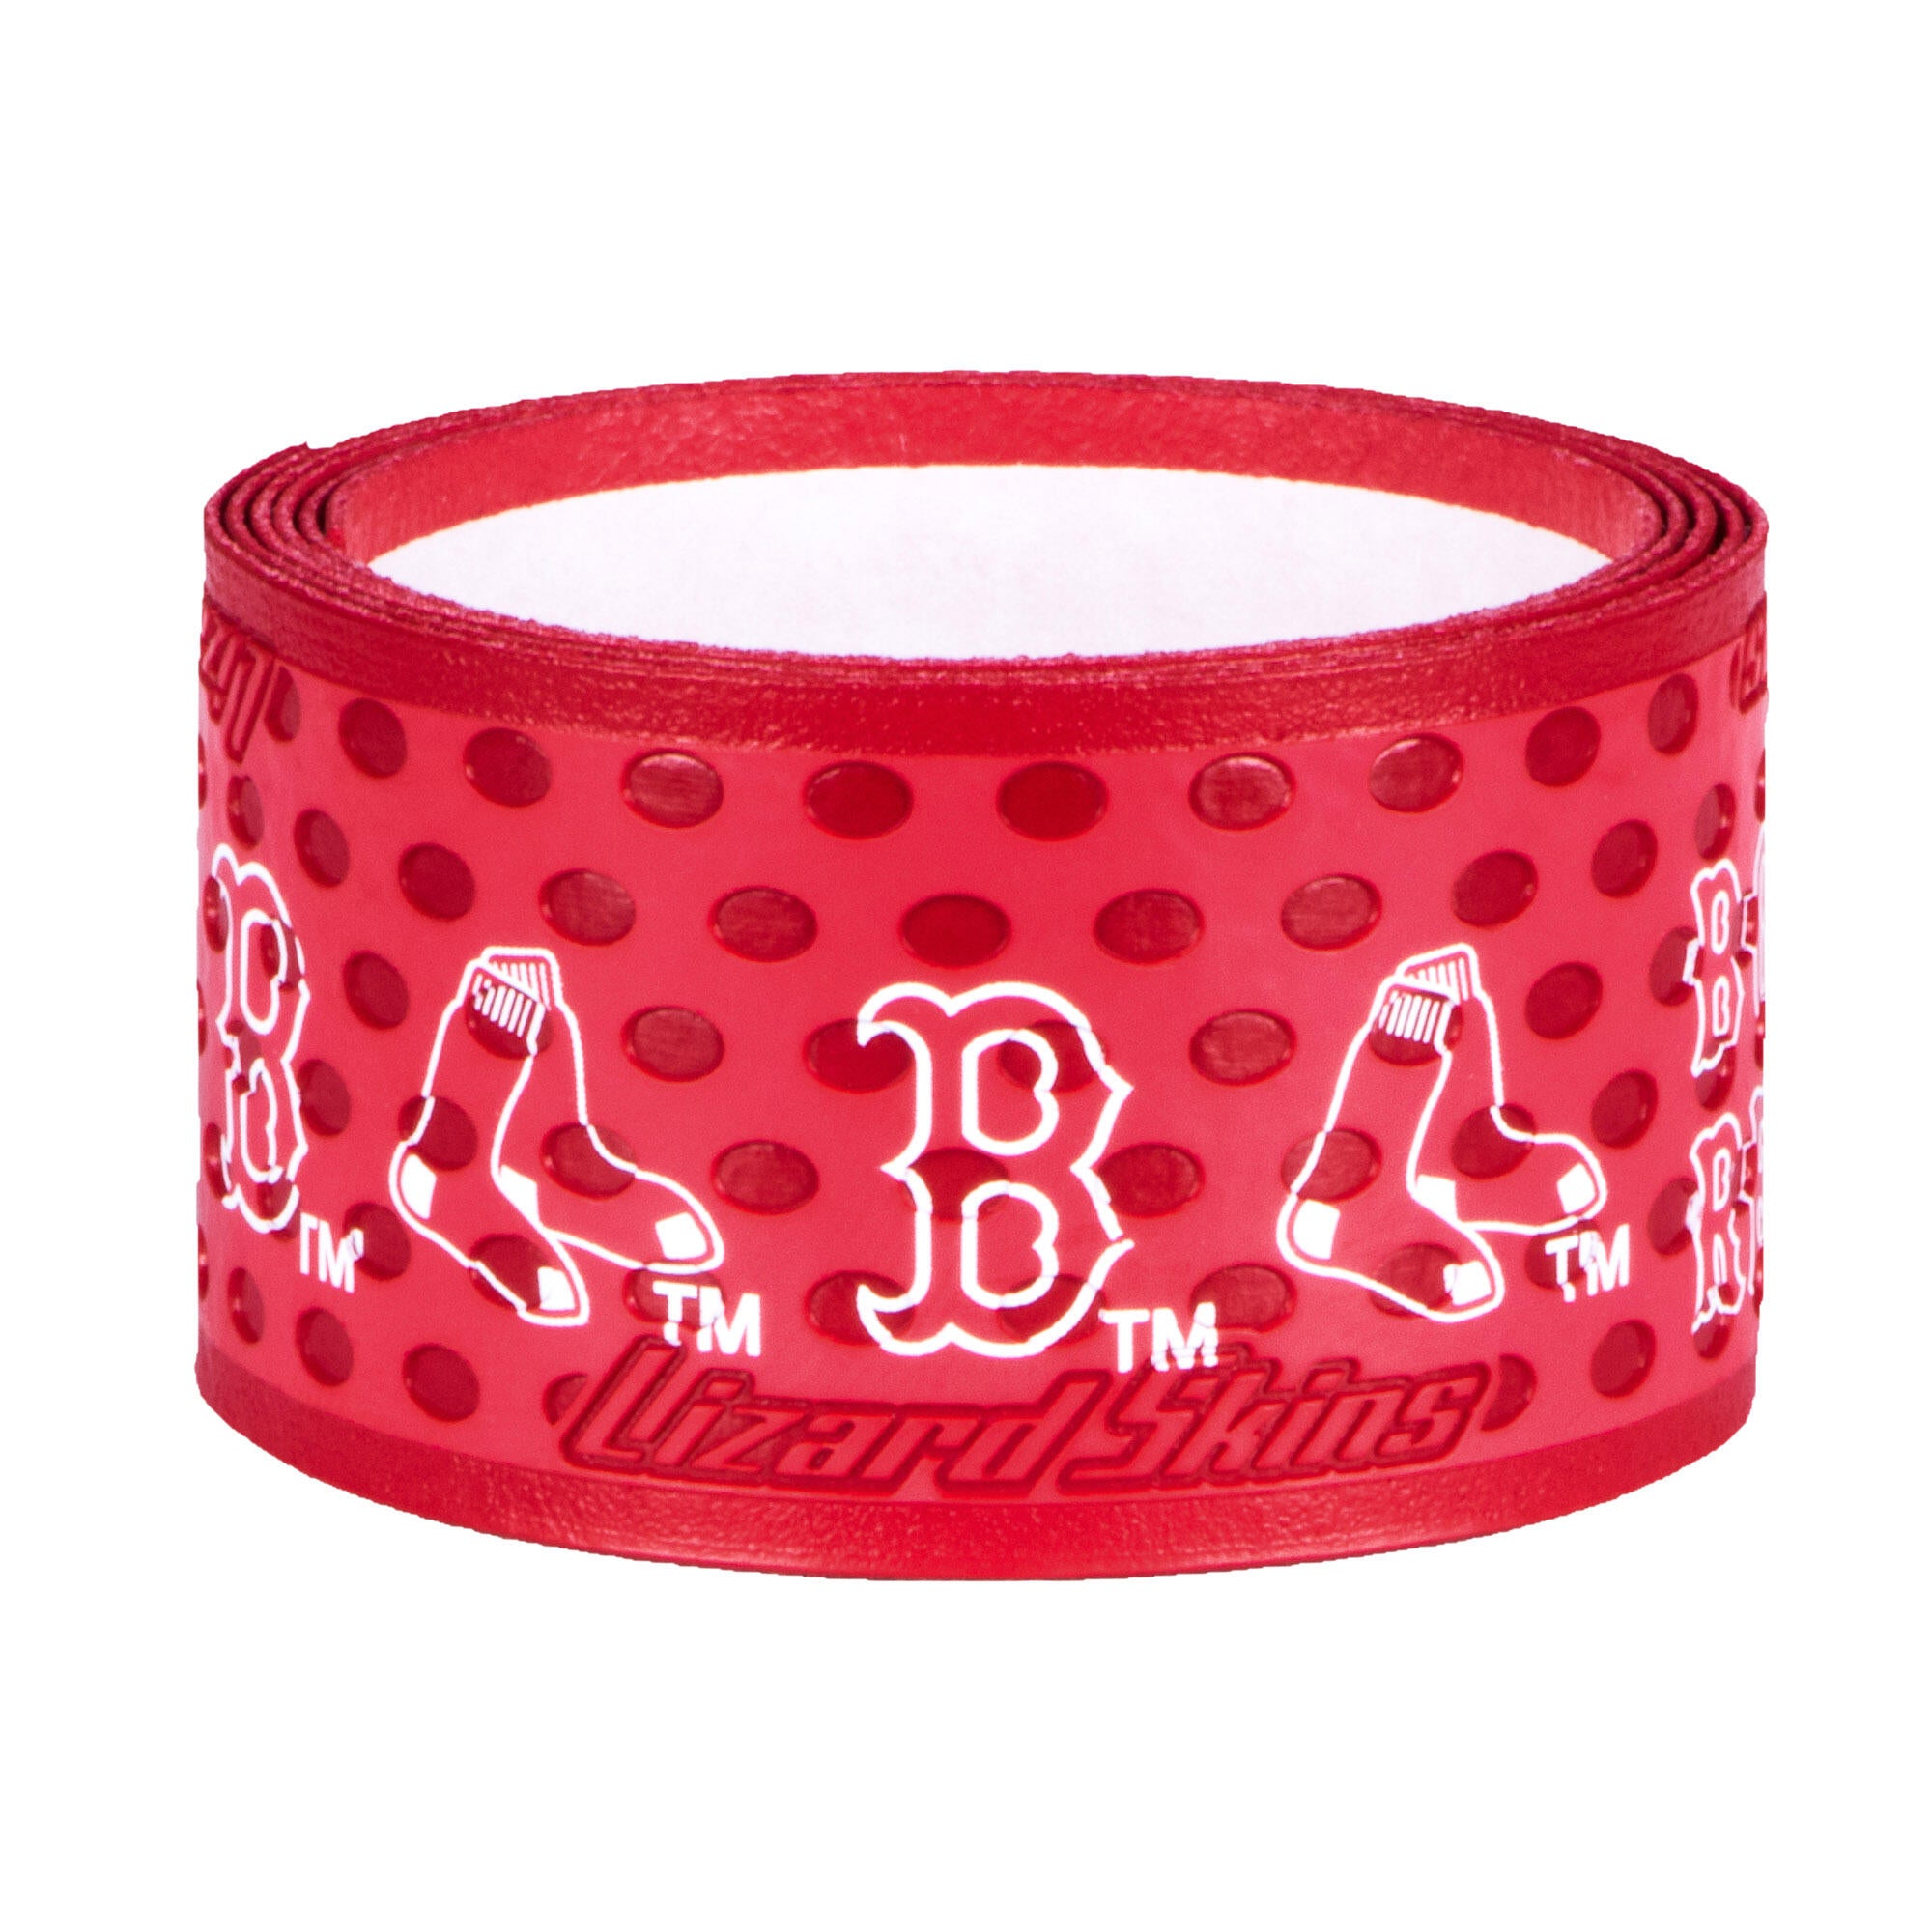 Boston Red Sox Mlb Team Logo Camo Style Nice Gift Home Decor